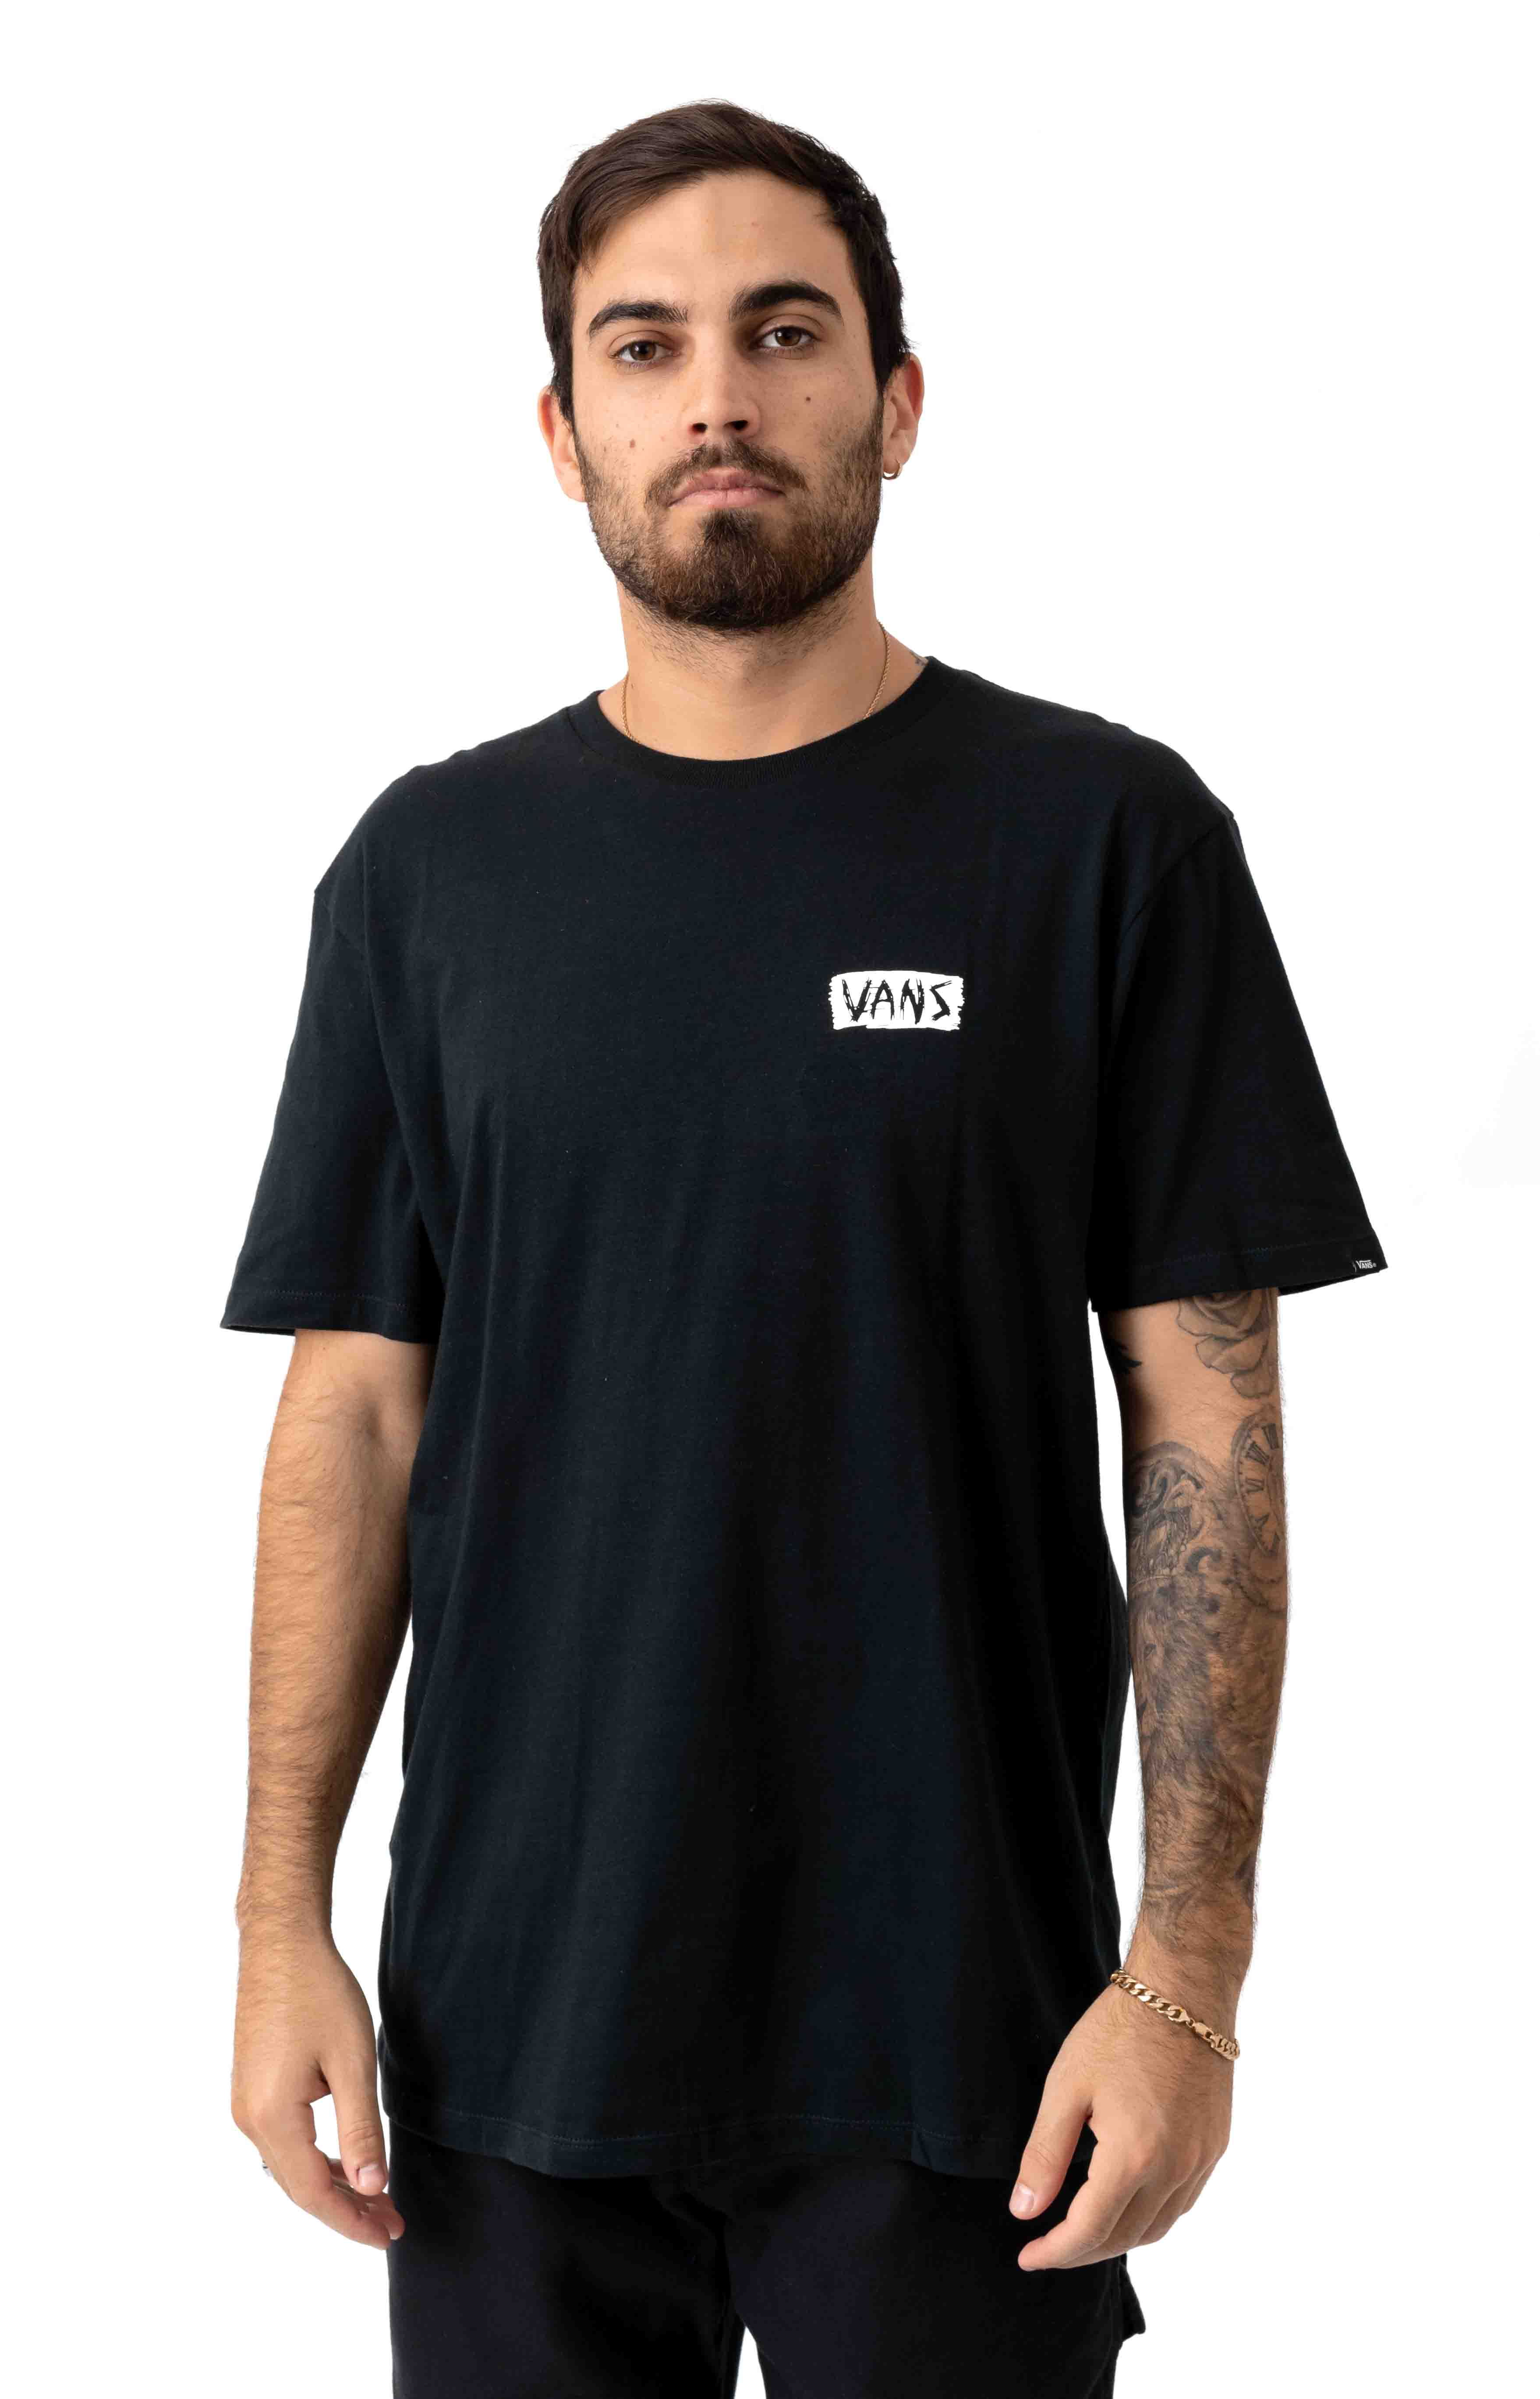 Scratched Vans T-Shirt - Black